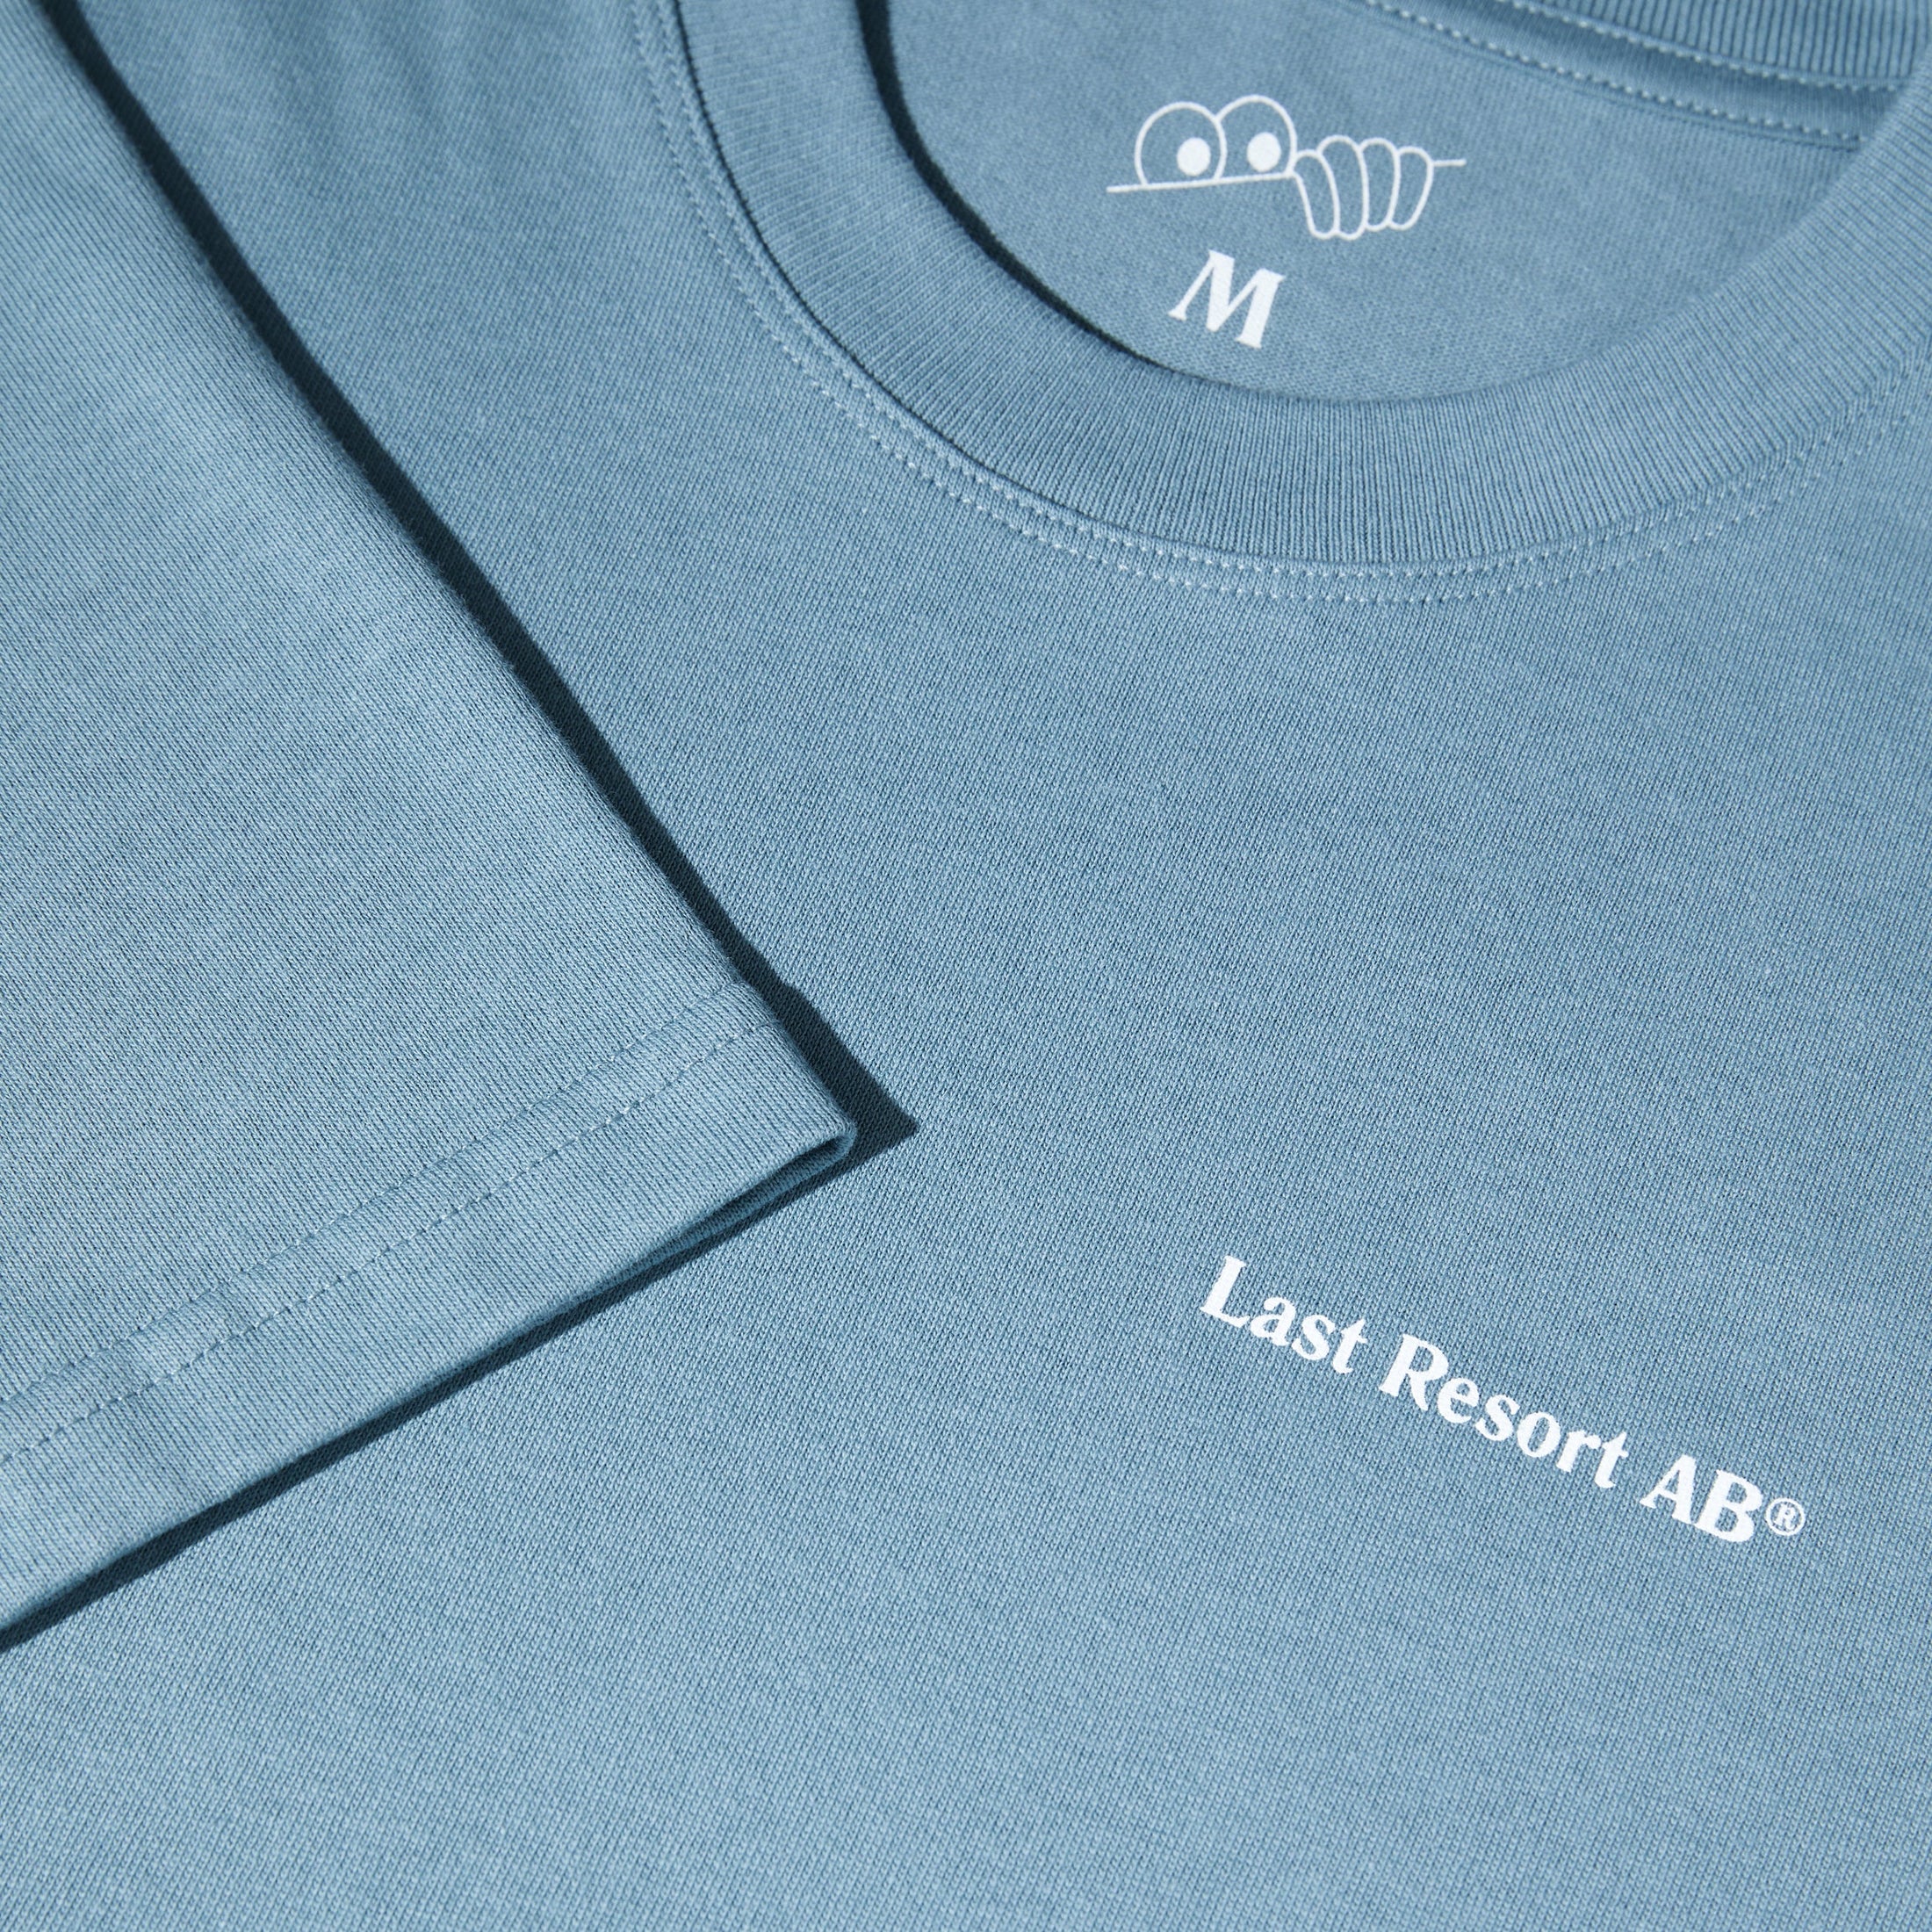 Last Resort AB Atlas Monogram Shortsleeve T-Shirt Blue Mirage